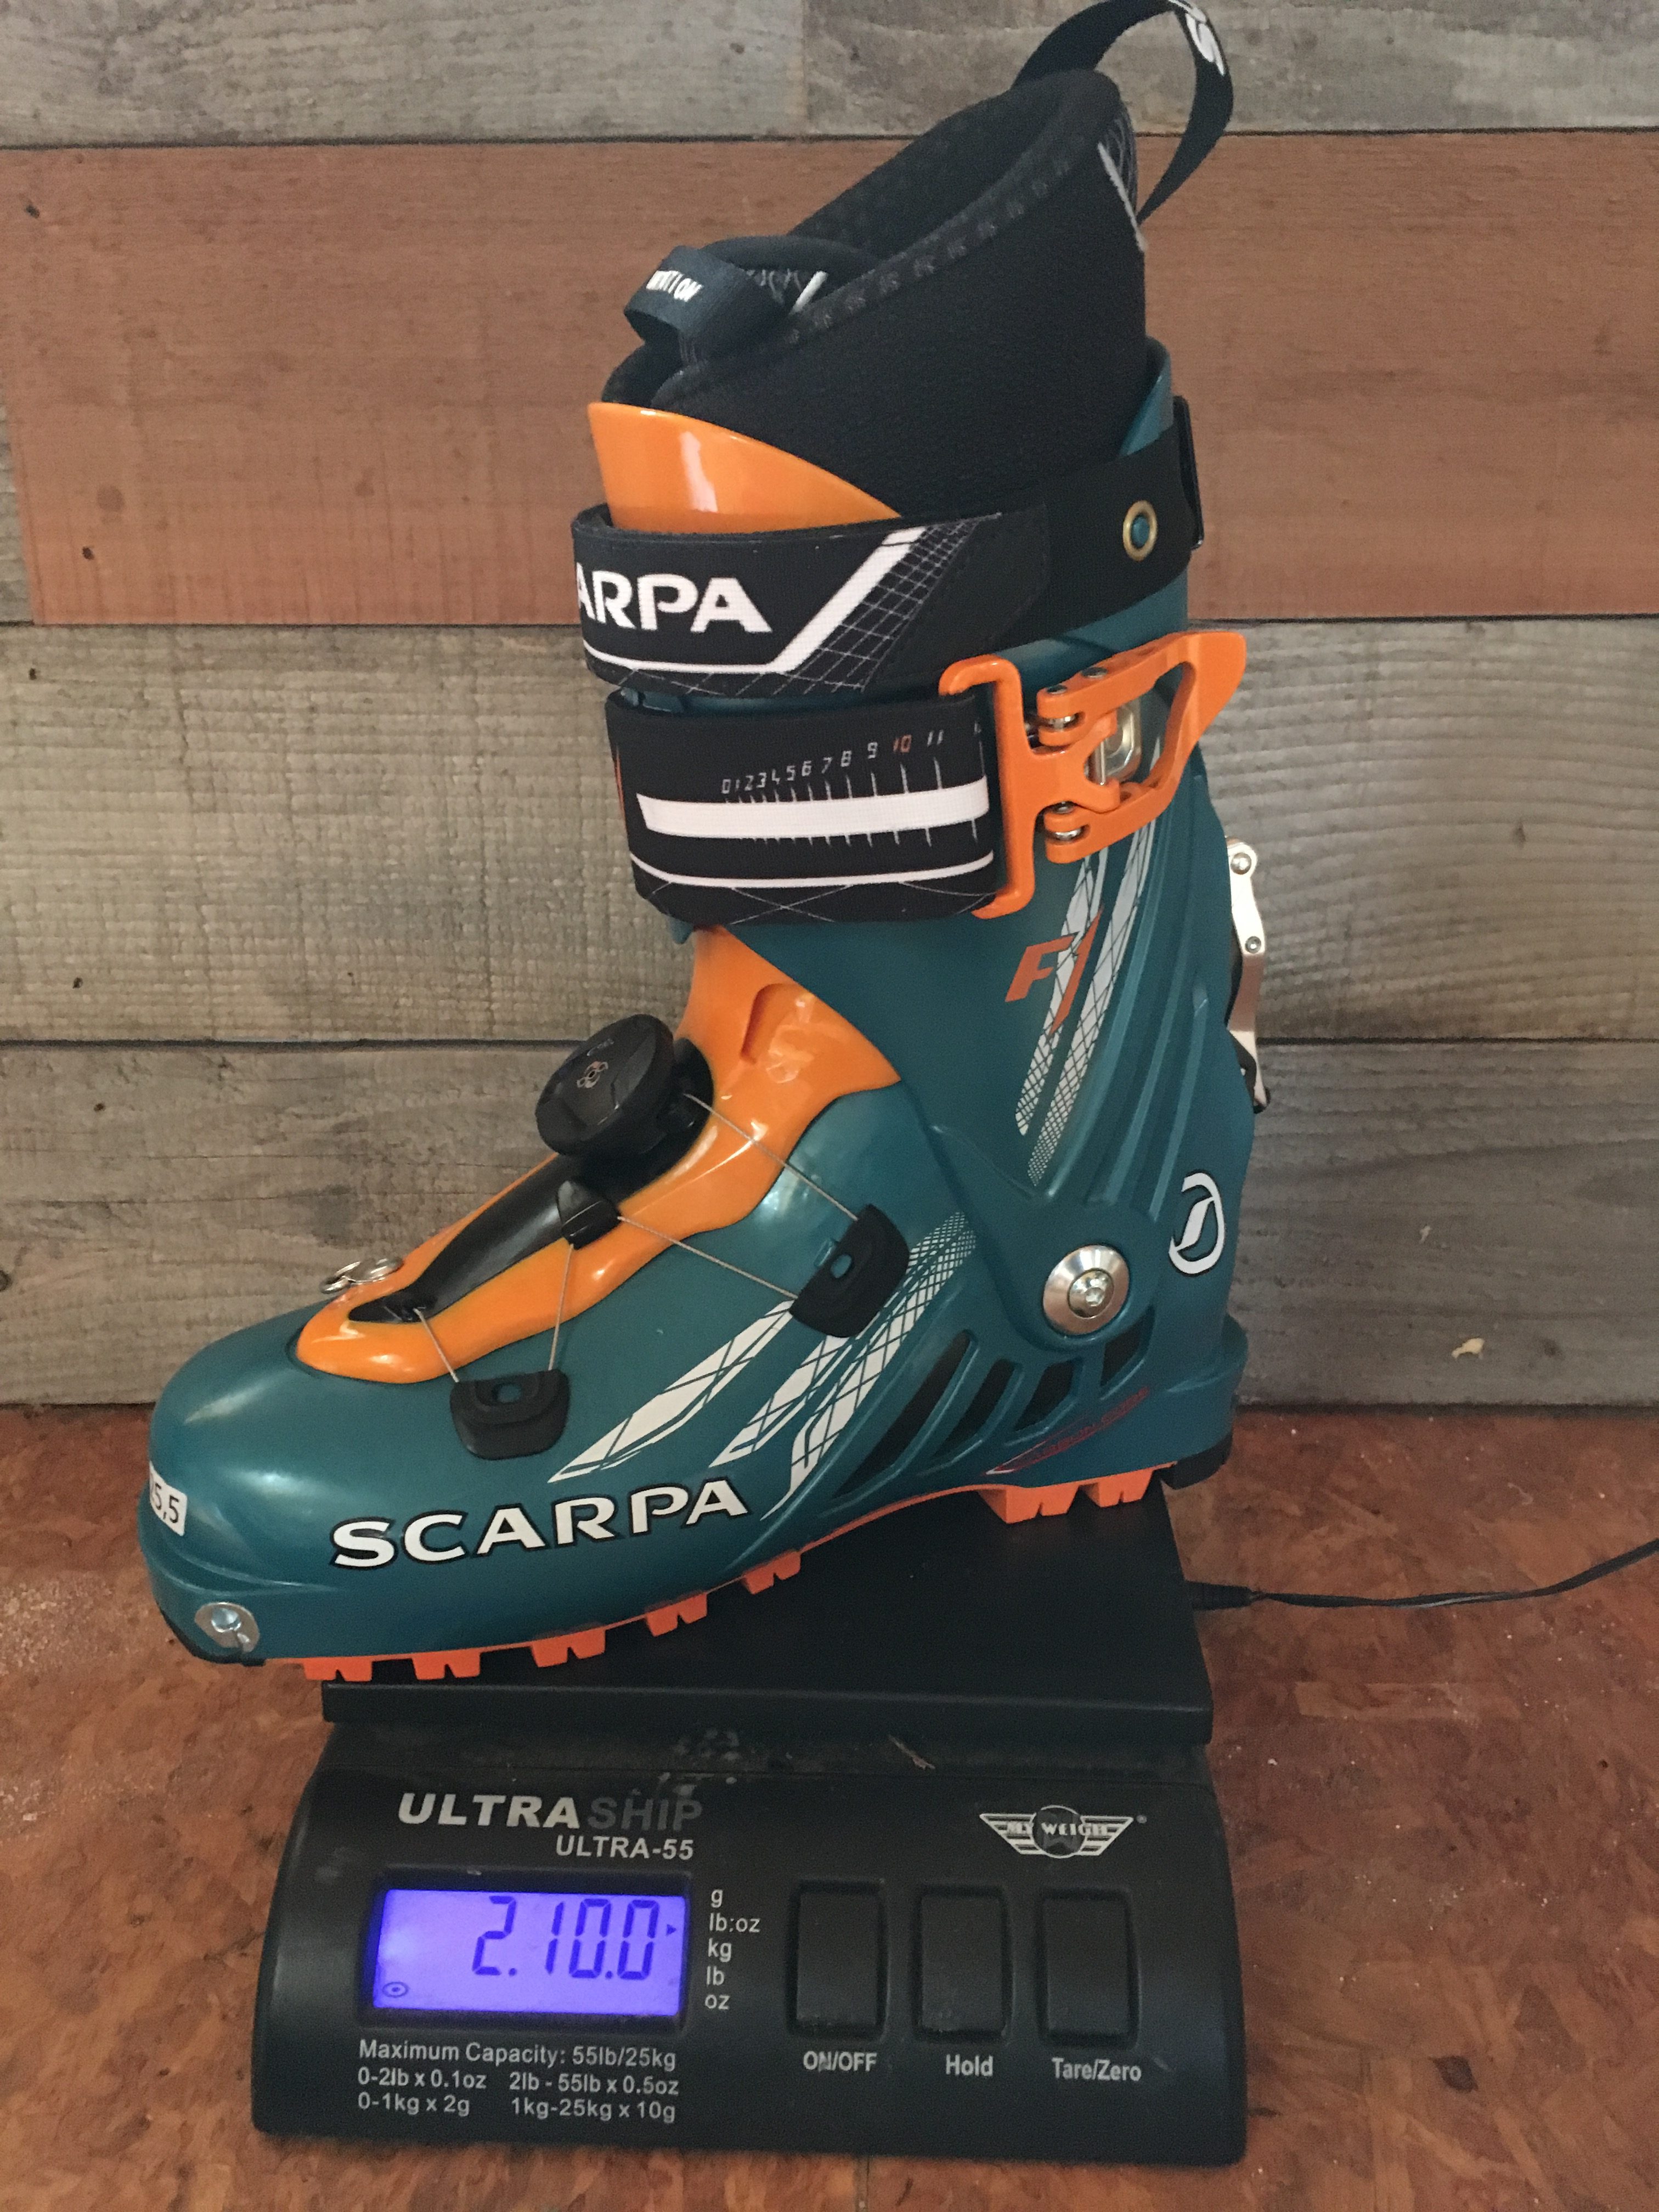 Scarpa F1 ski boot - a lightweight 